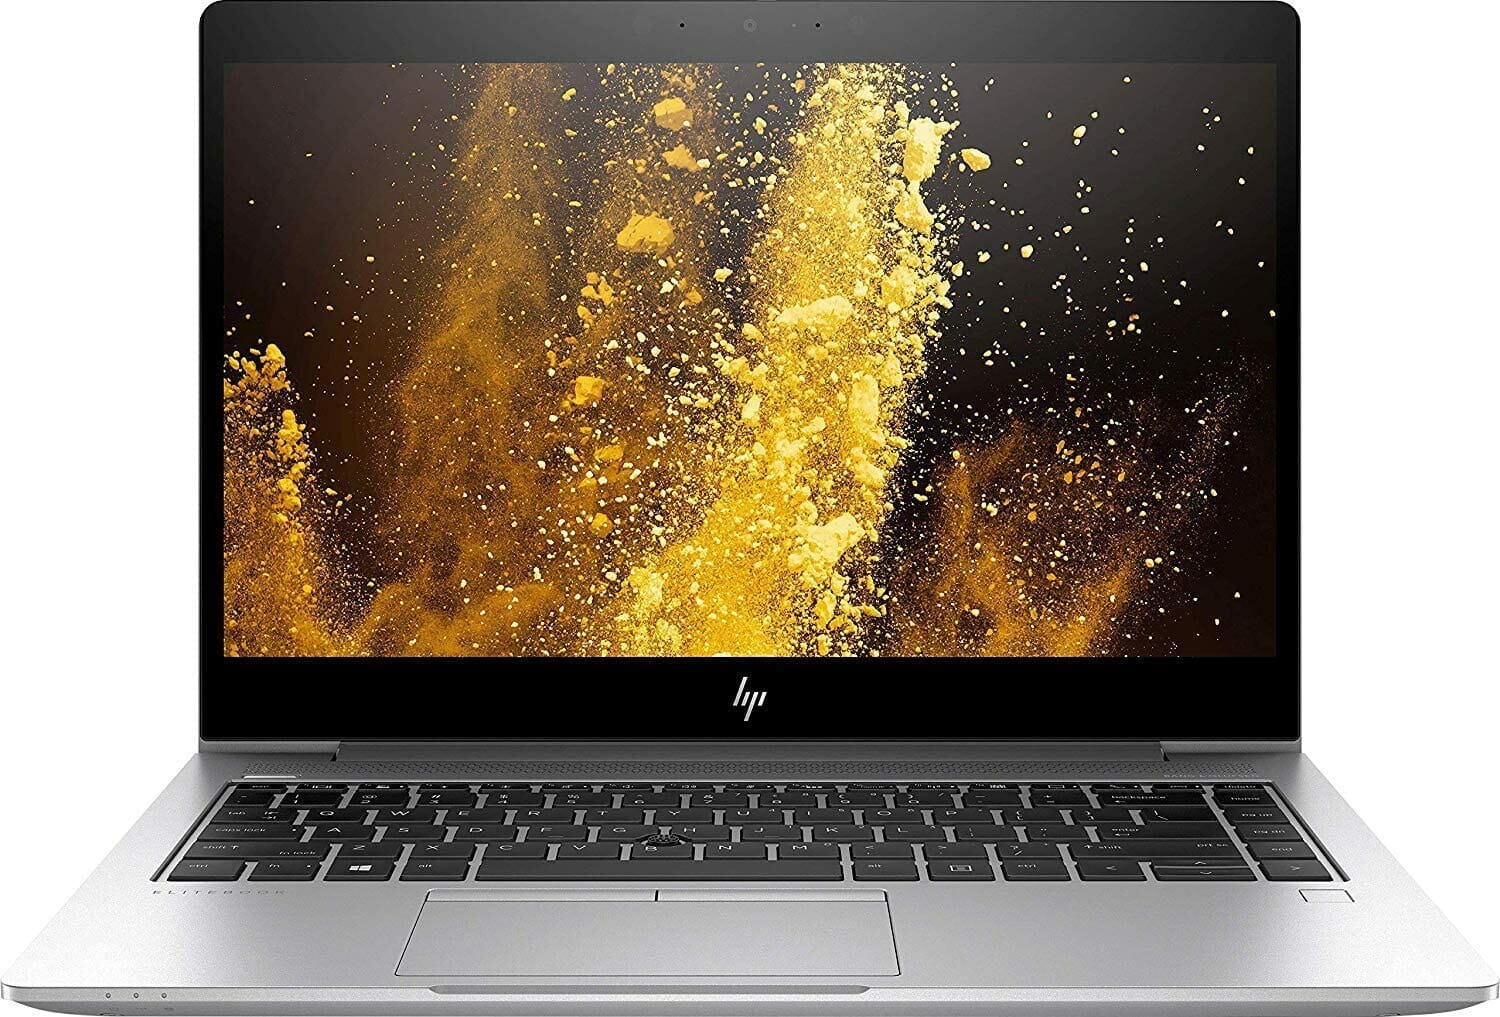 
HP Elitebook 840 G5 Laptop Intel Core i7